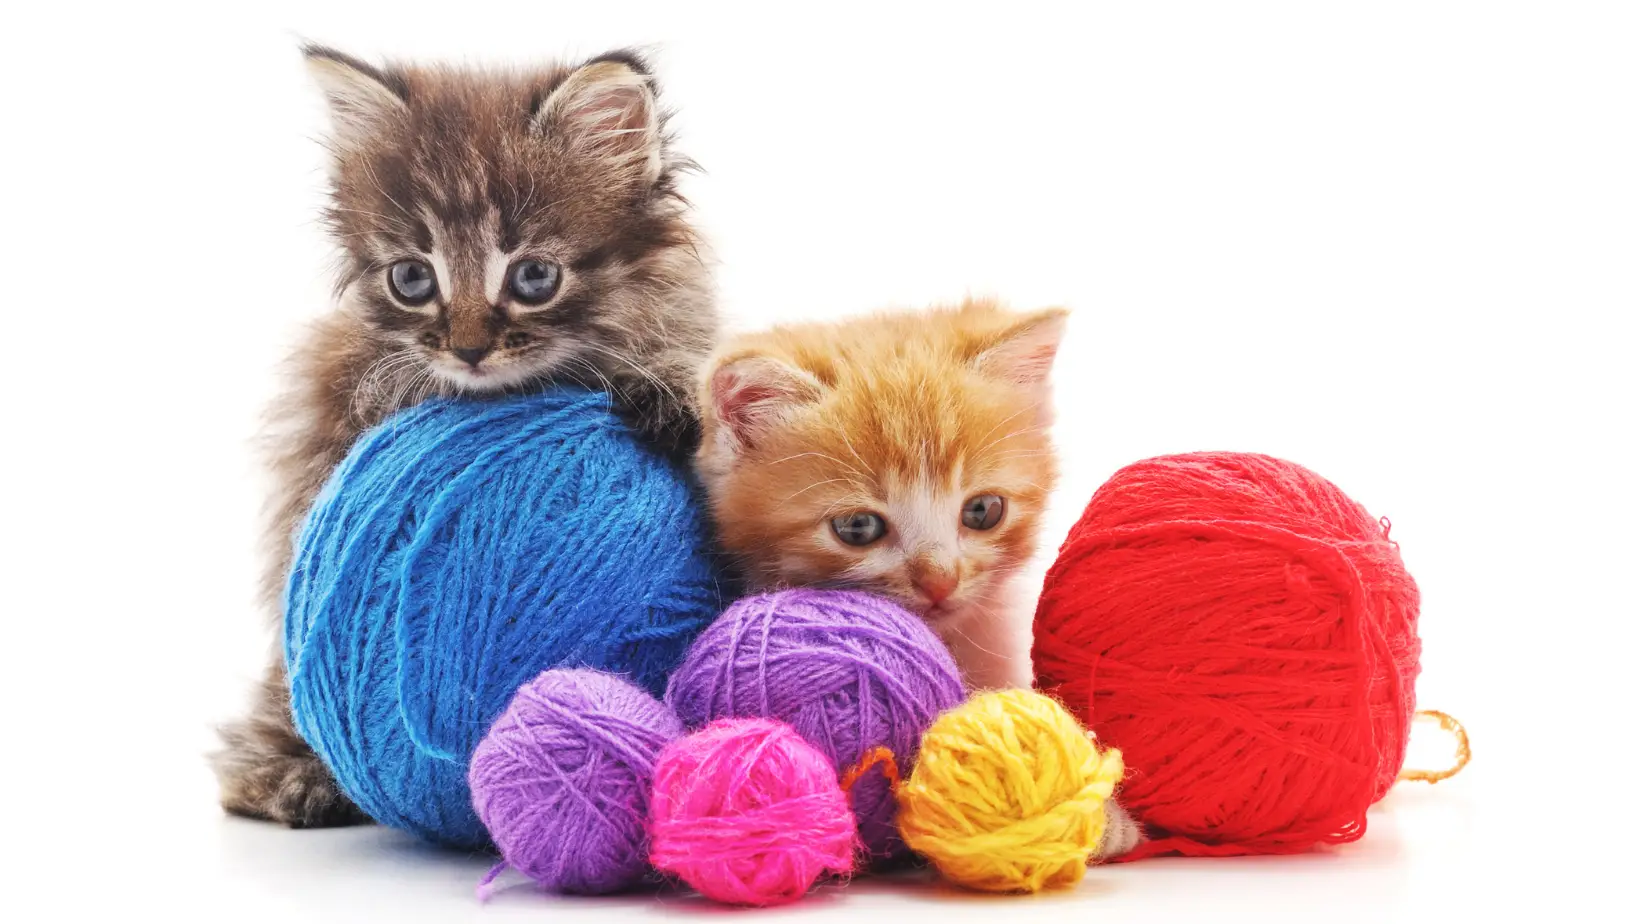 Why Do Cats Like Yarn?